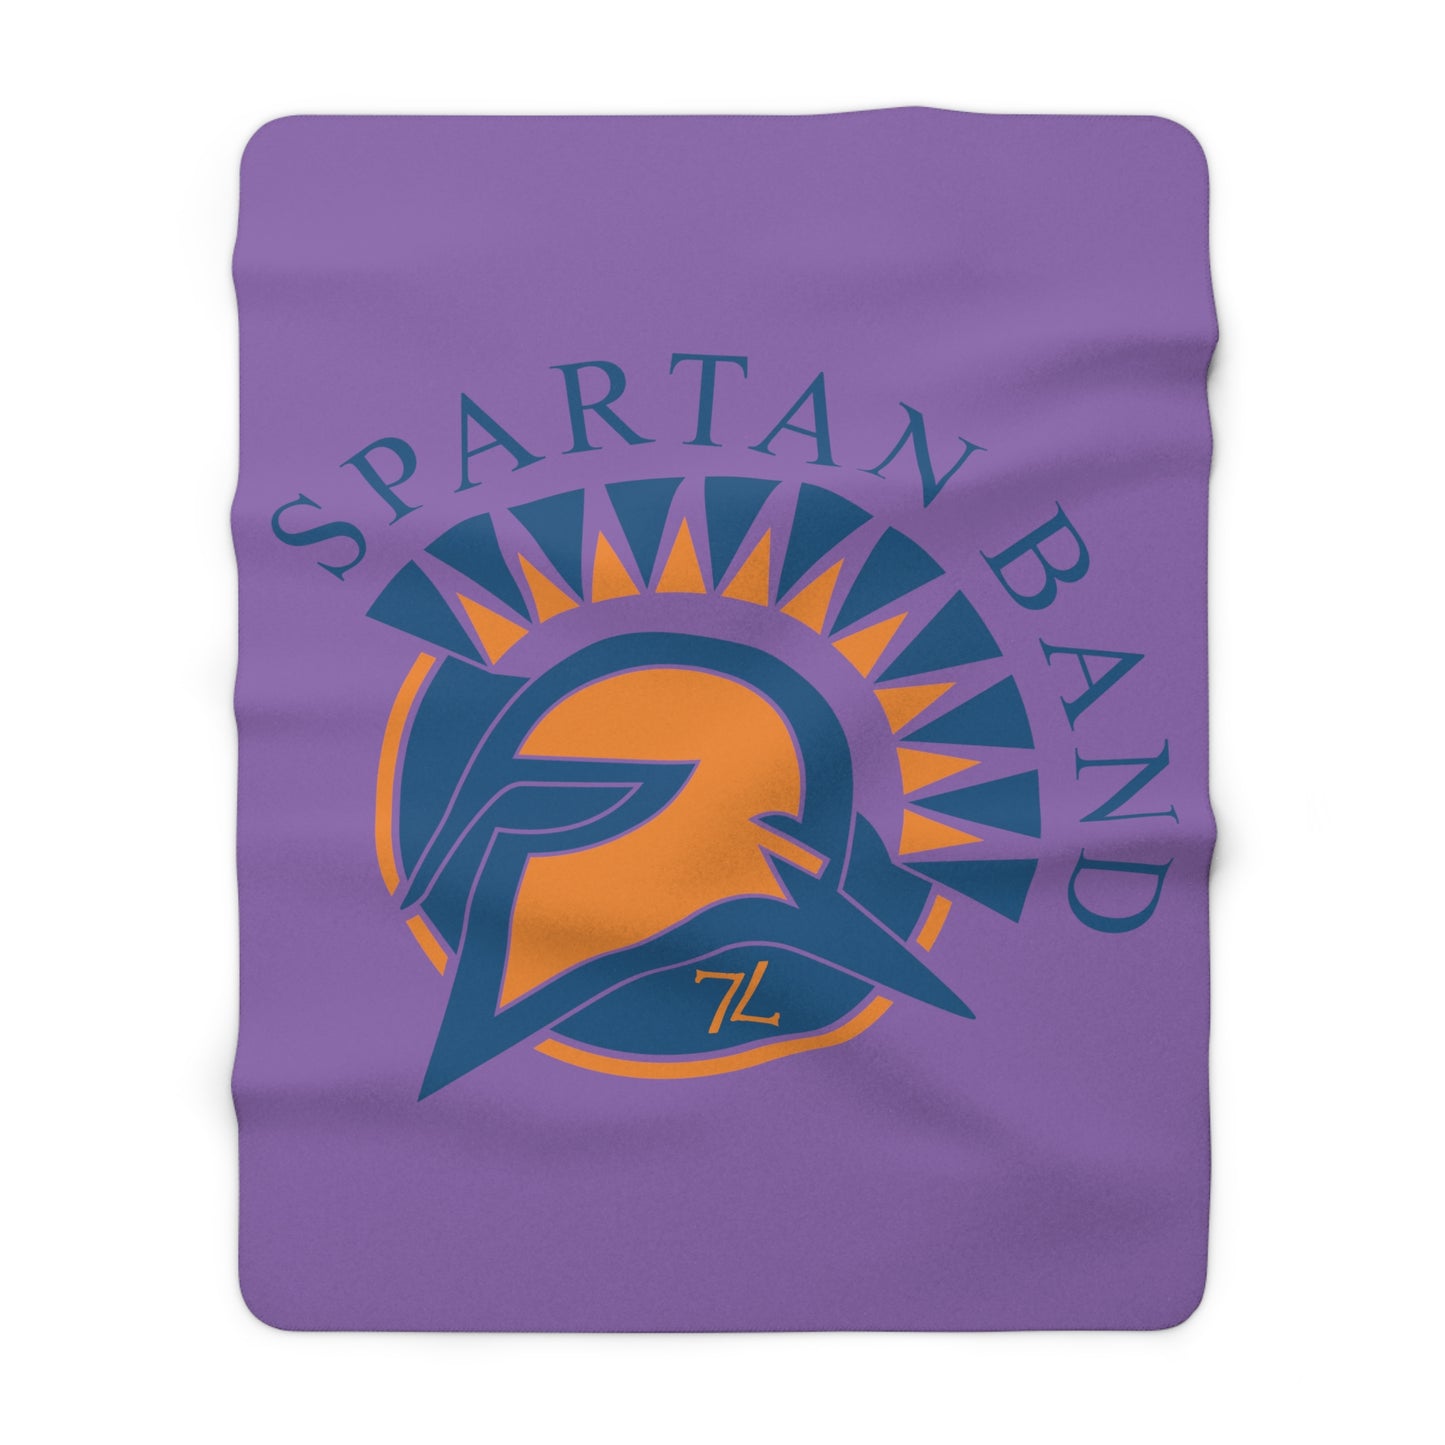 Spartan Band - Sherpa Fleece Blanket - Lavender